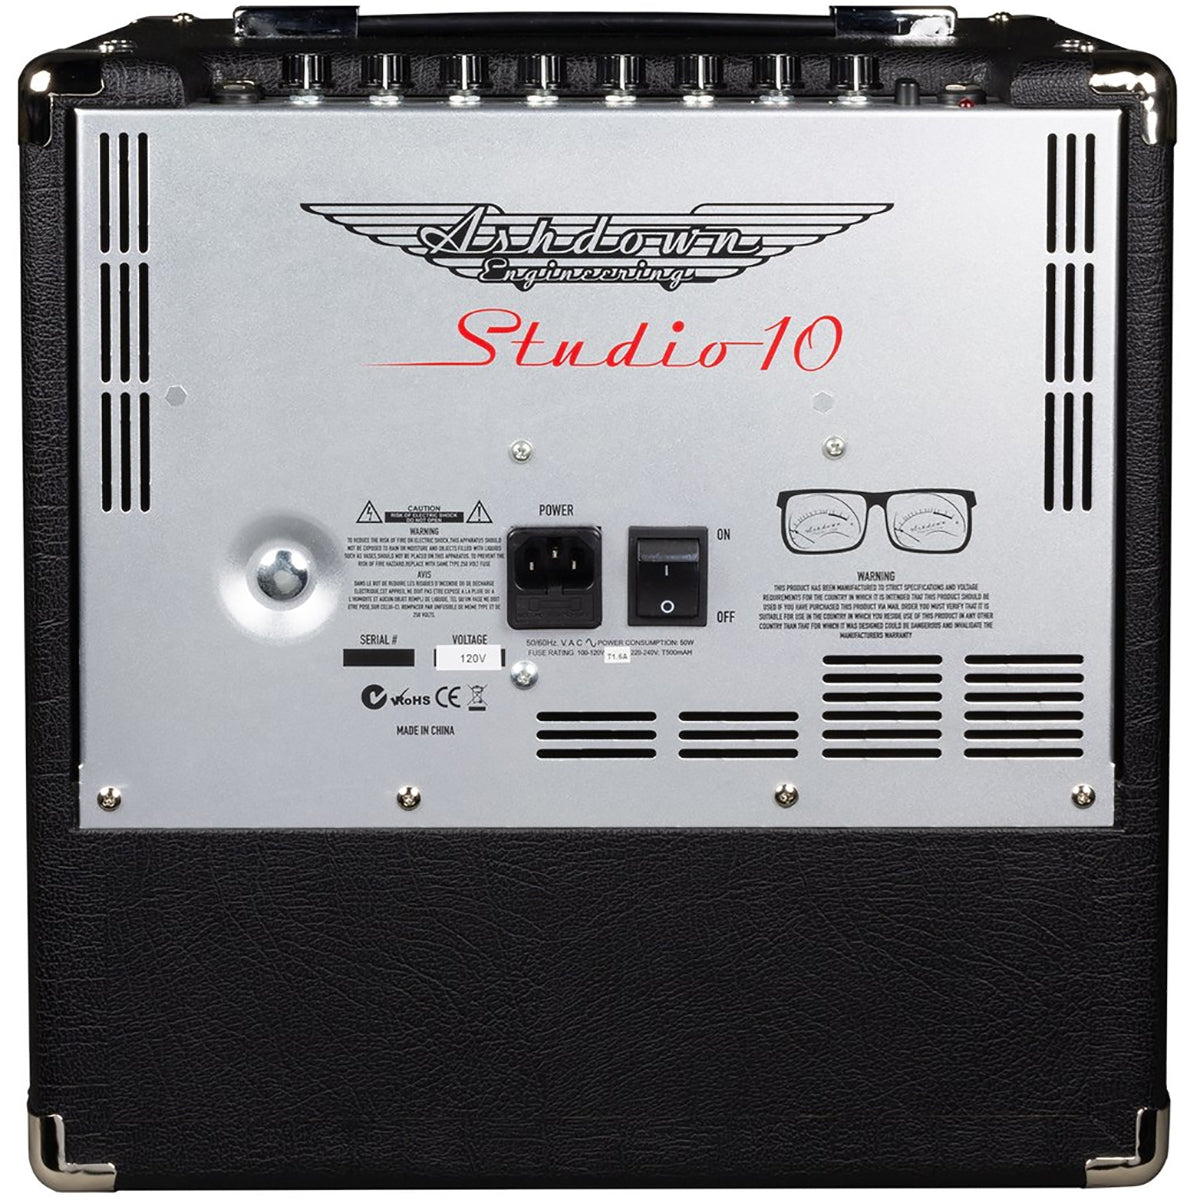 Combo Ashdown Studio-10 Para Bajo 60w